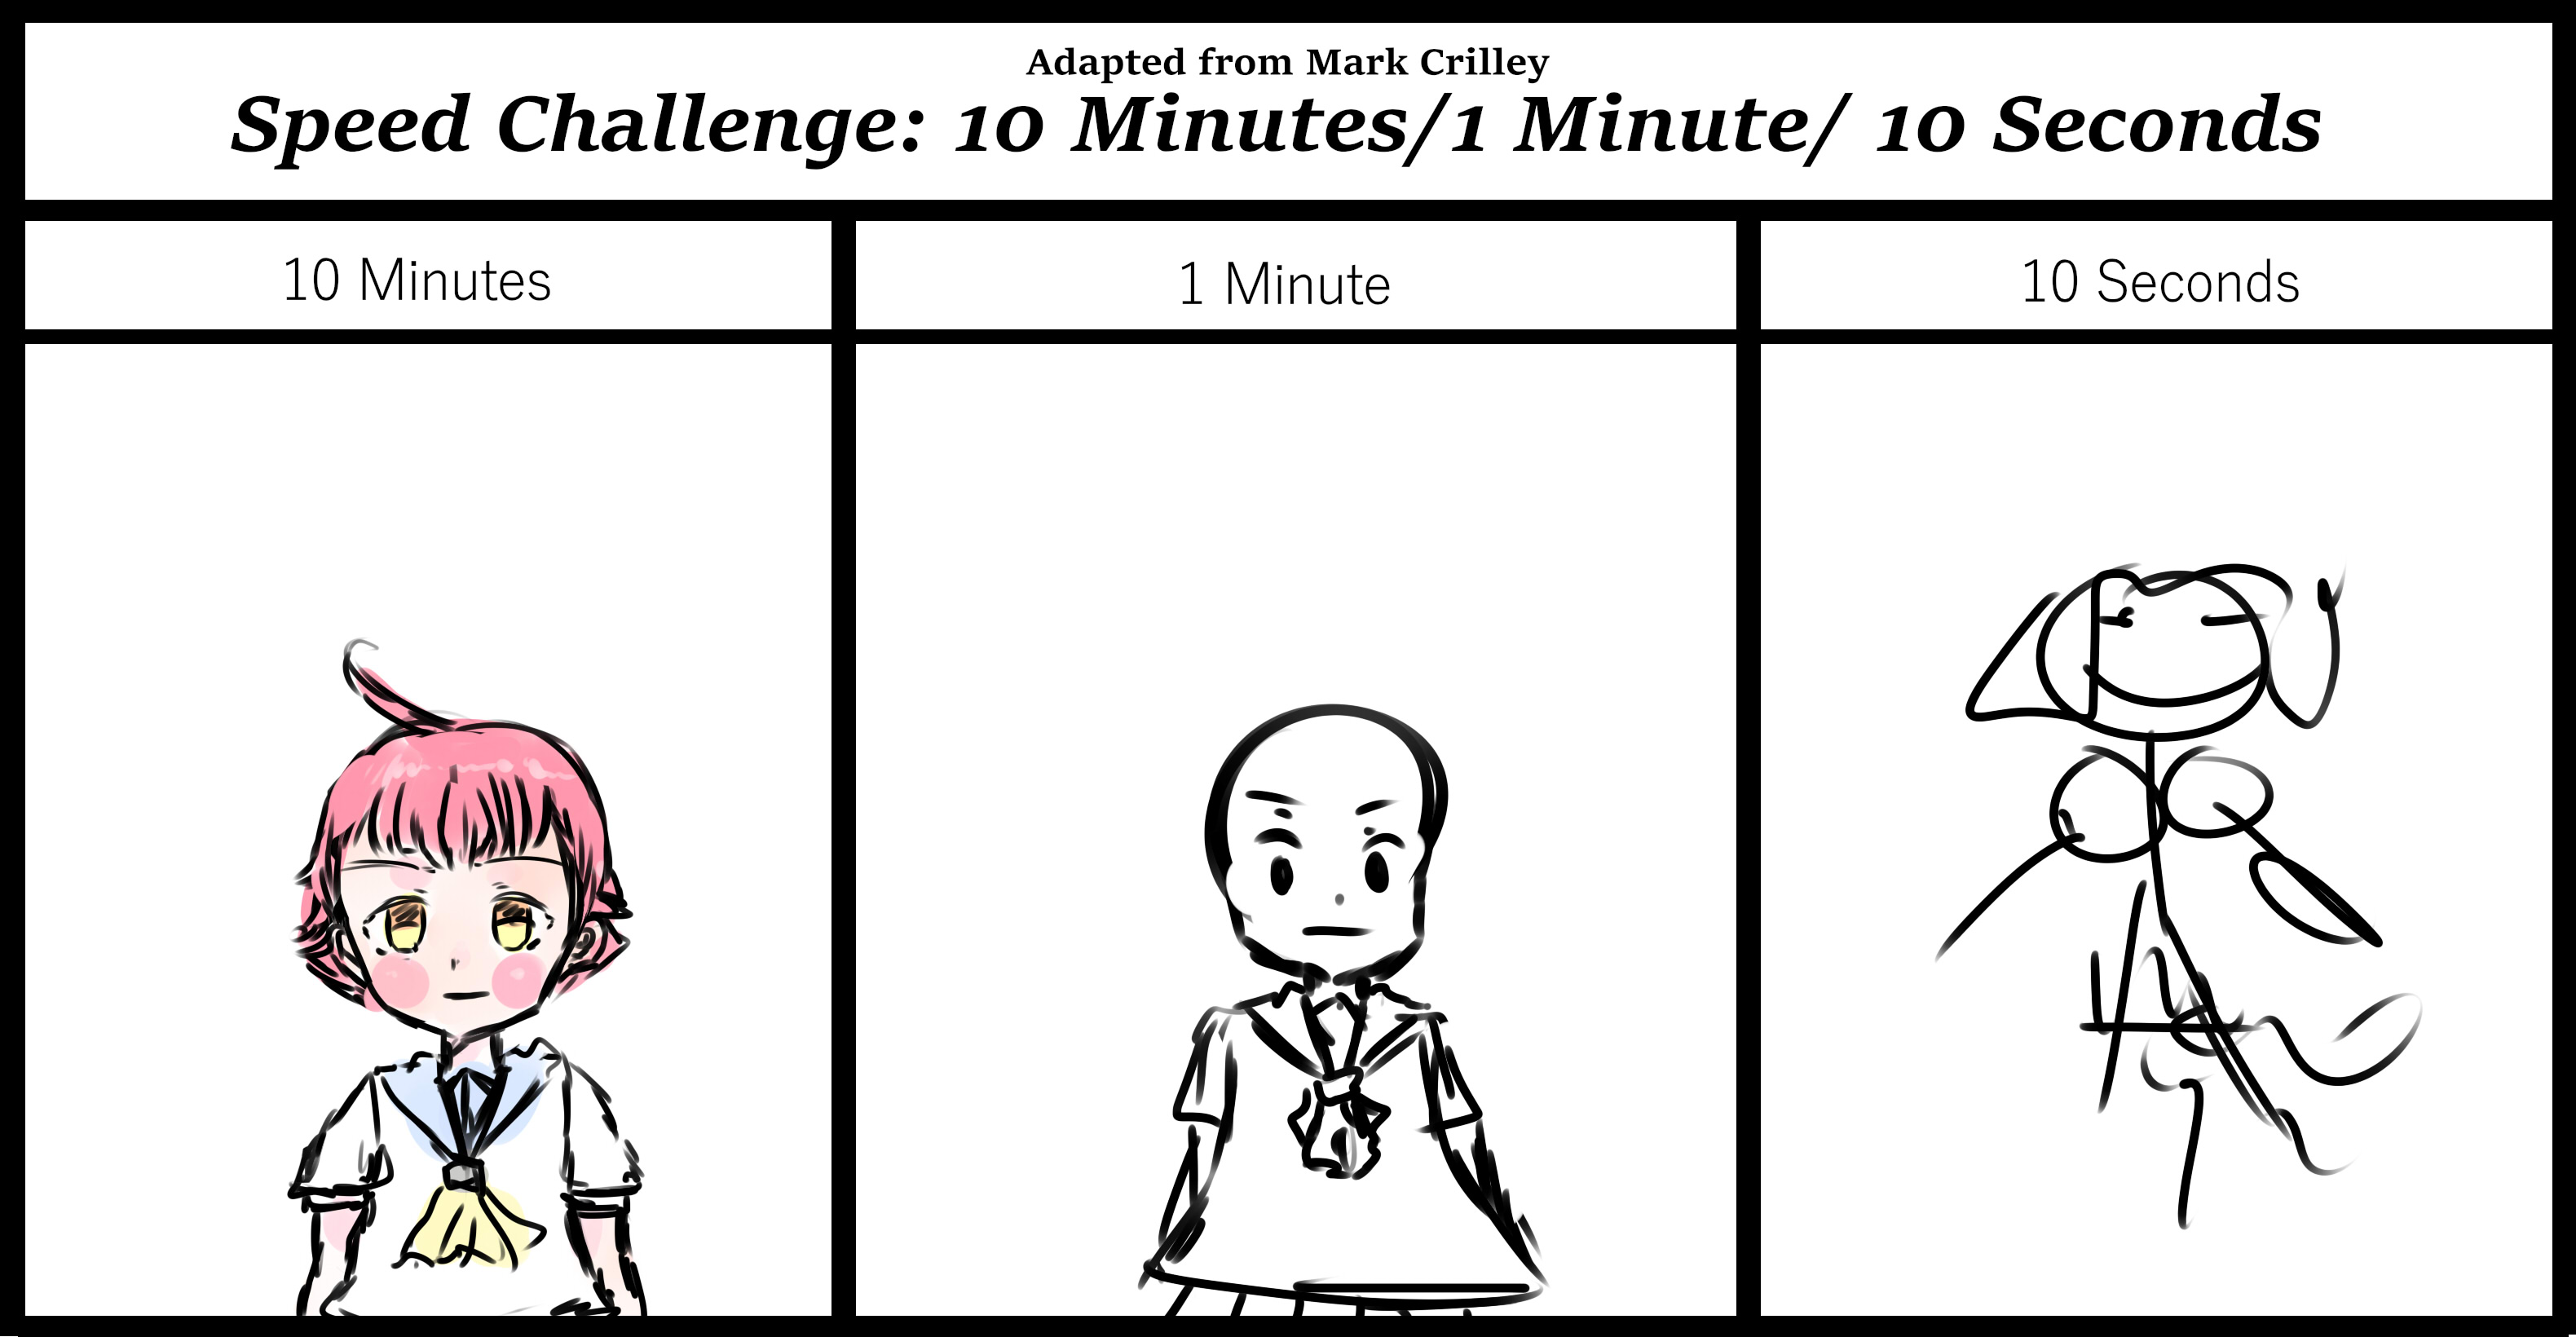 SPEED CHALLENGE: 10 Minutes, 1 Minute